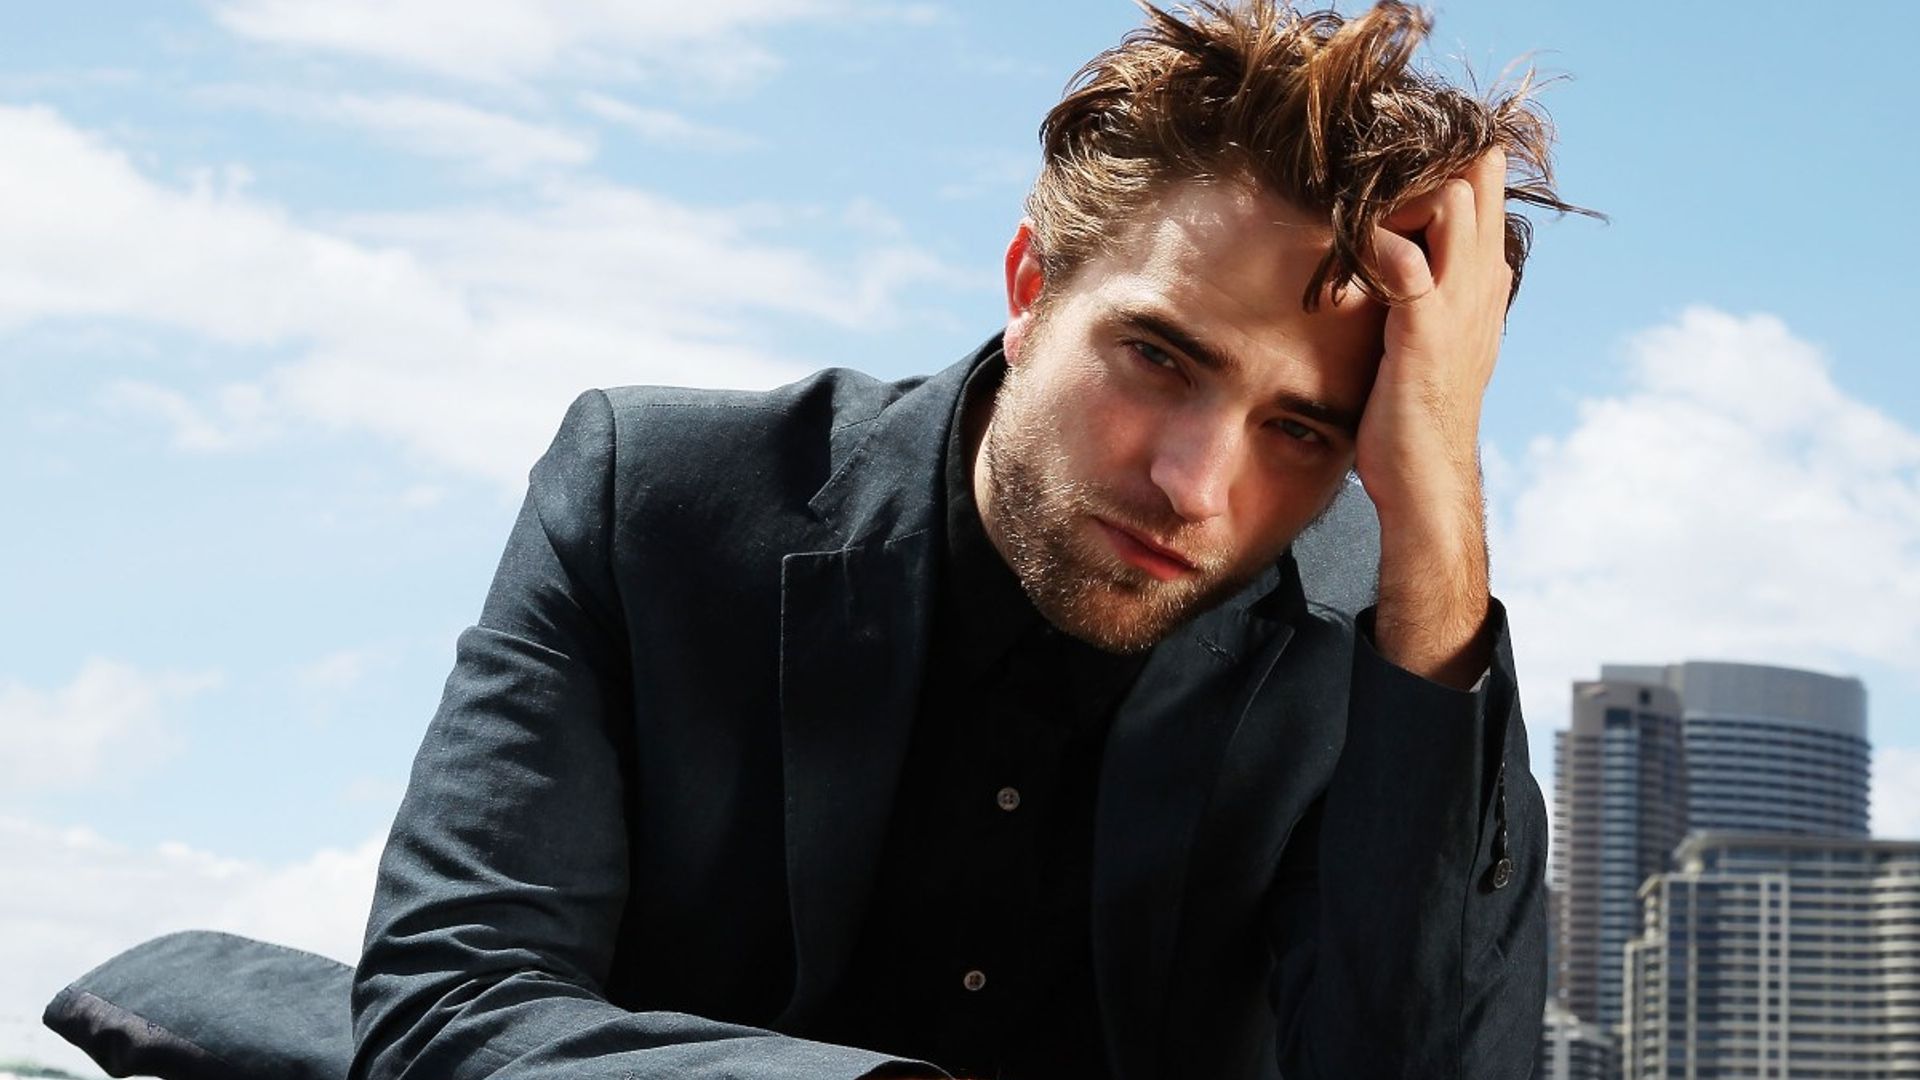 Robert Pattinson panics after blowing up microwave during lockdown